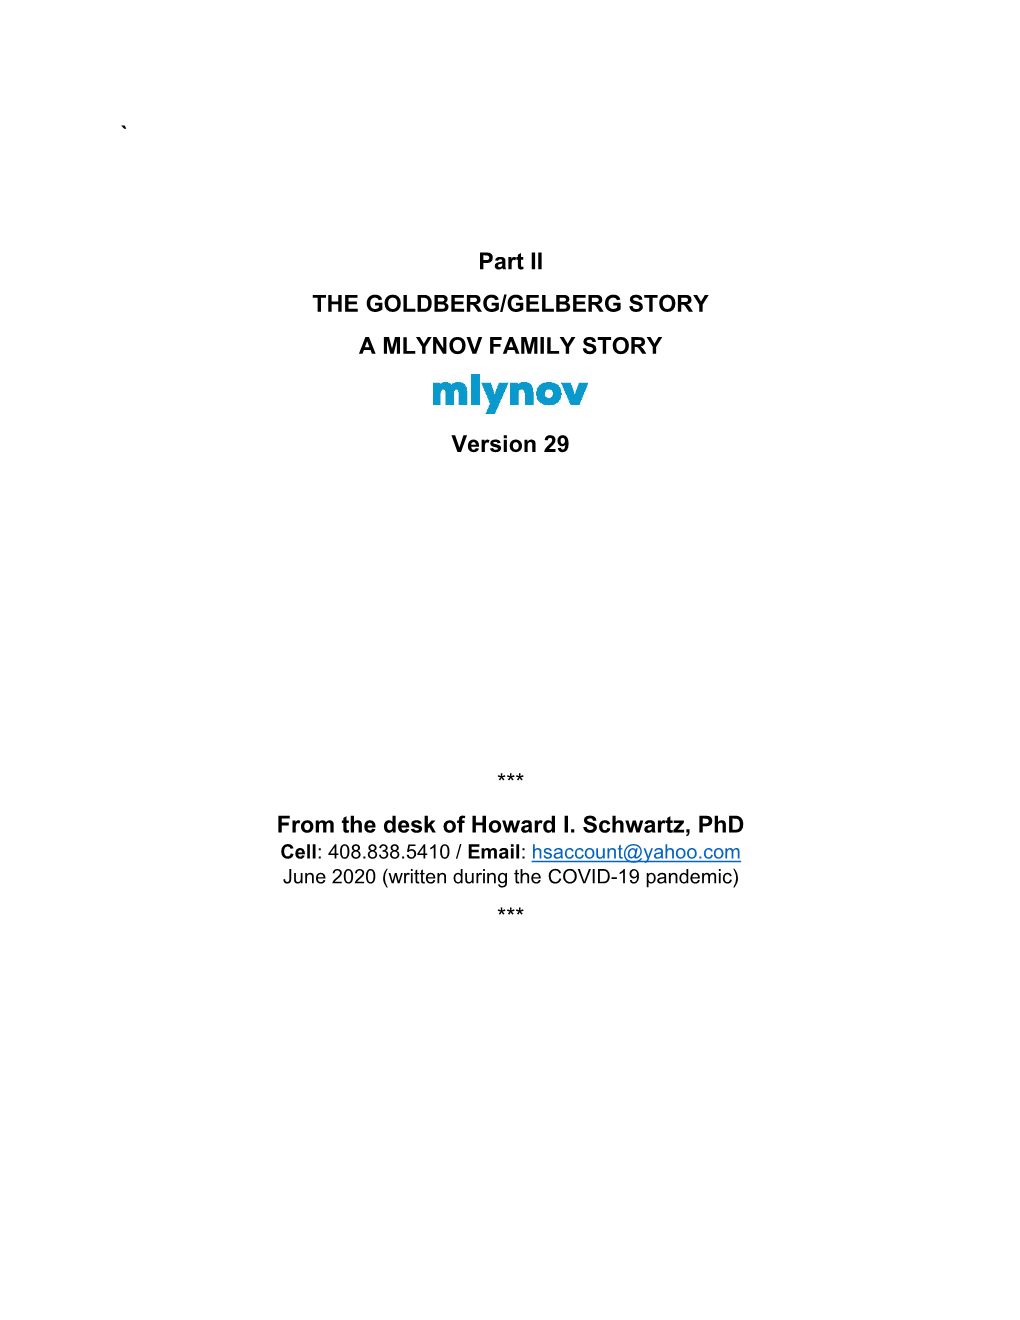 Part II the GOLDBERG/GELBERG STORY a MLYNOV FAMILY STORY